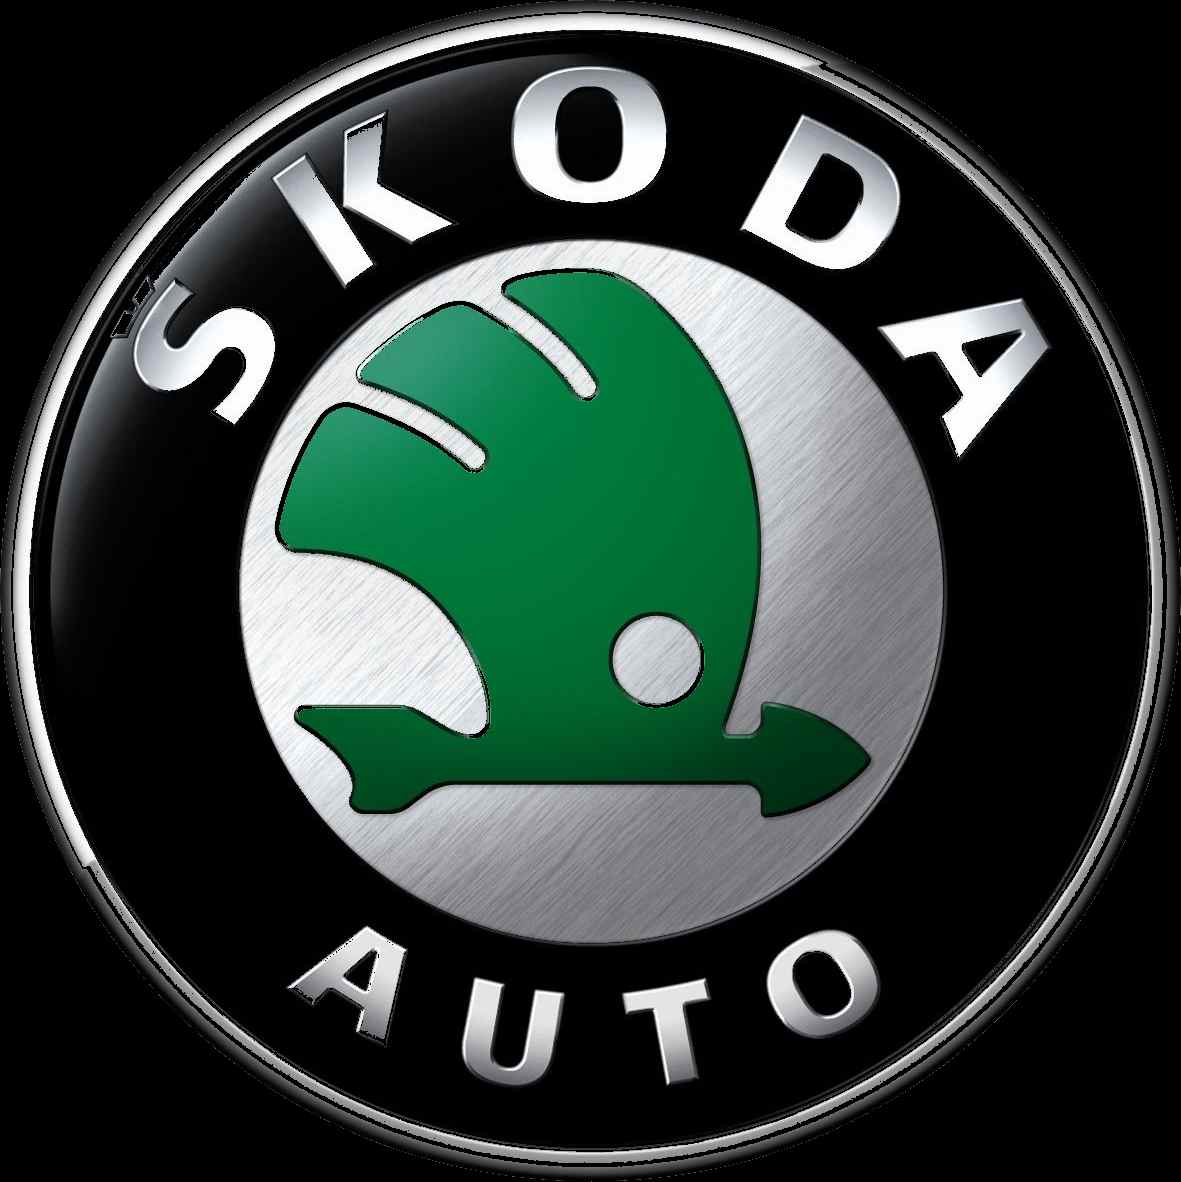 Skoda Auto revenues, profit down in first half of 2008 